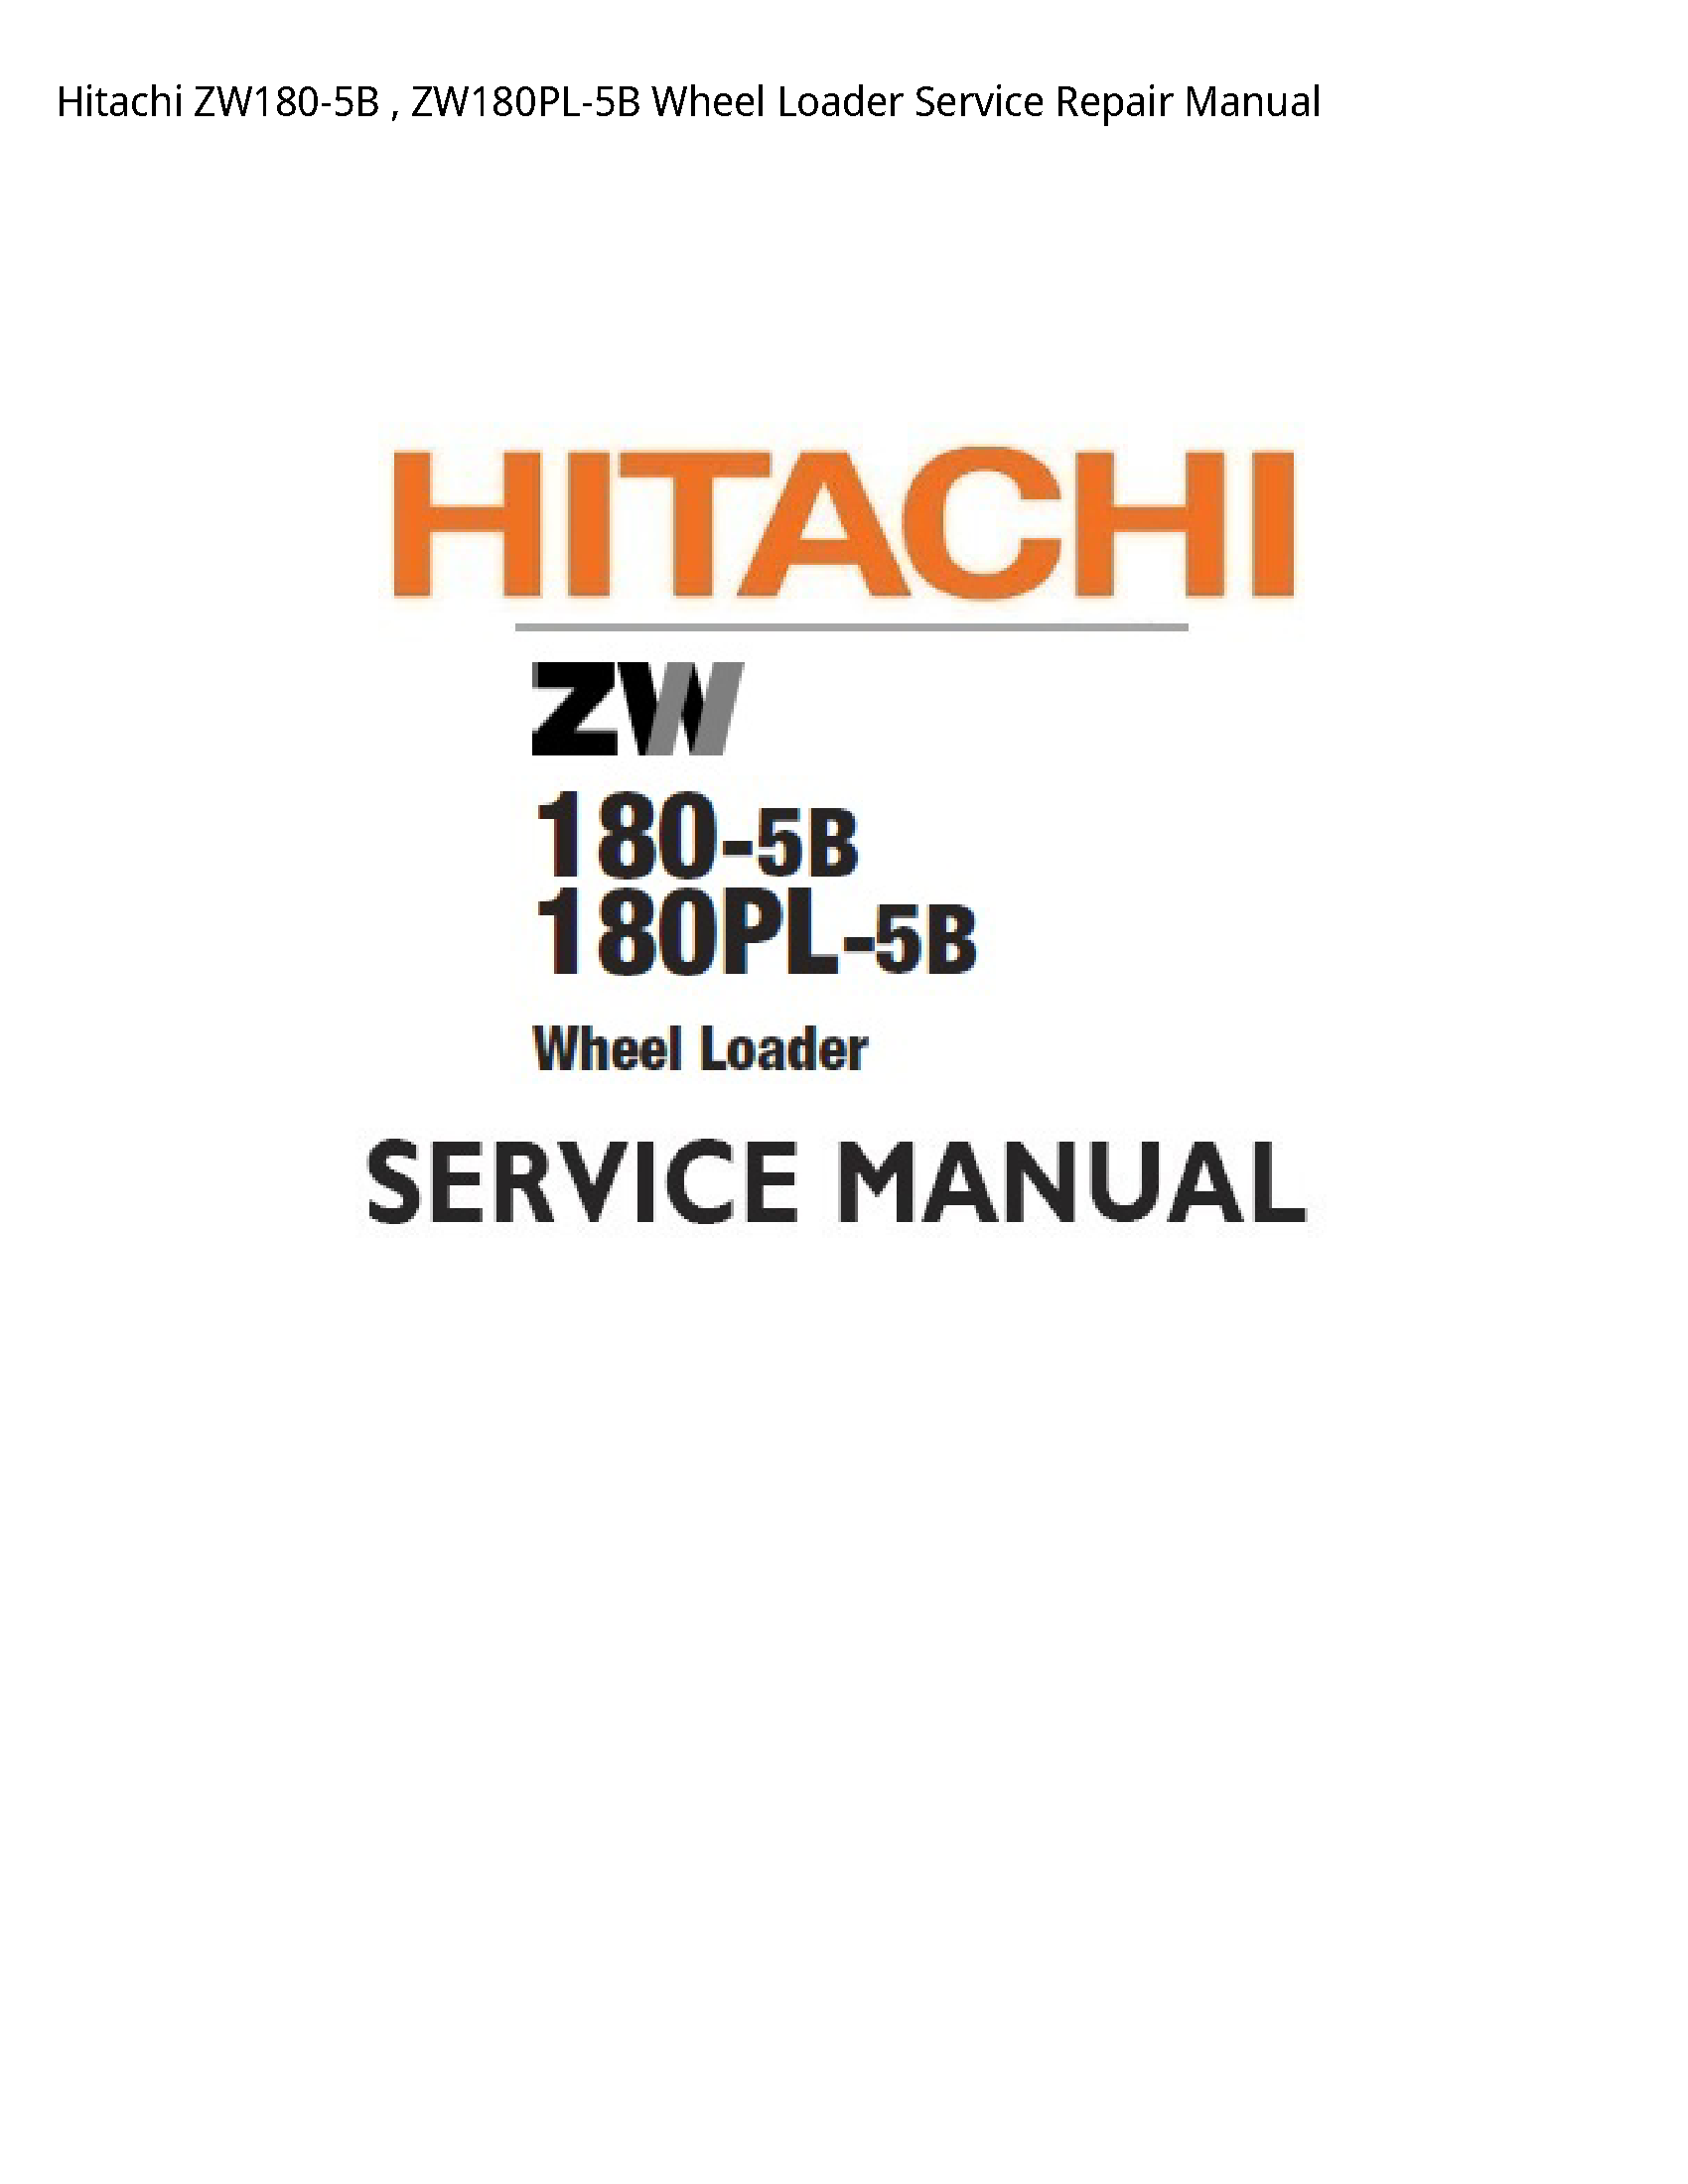 Hitachi ZW180-5B Wheel Loader manual